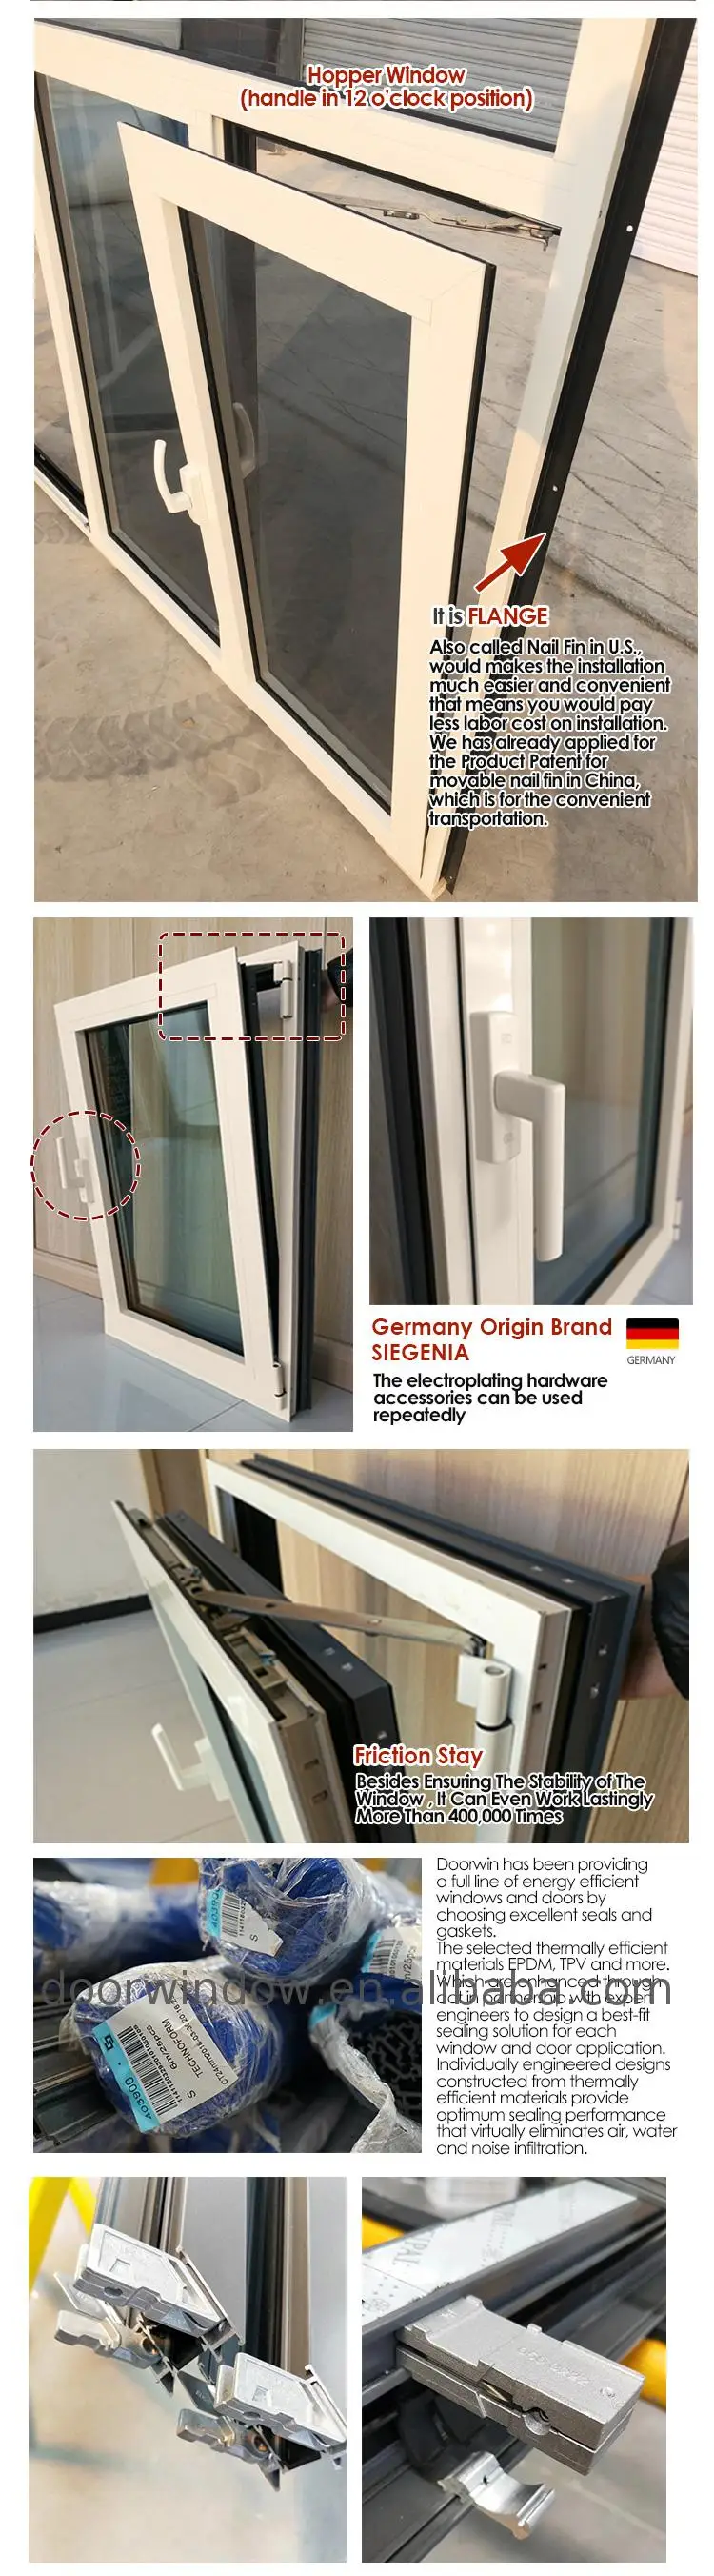 Fixed windows egress casement window double glazing aluminum awning